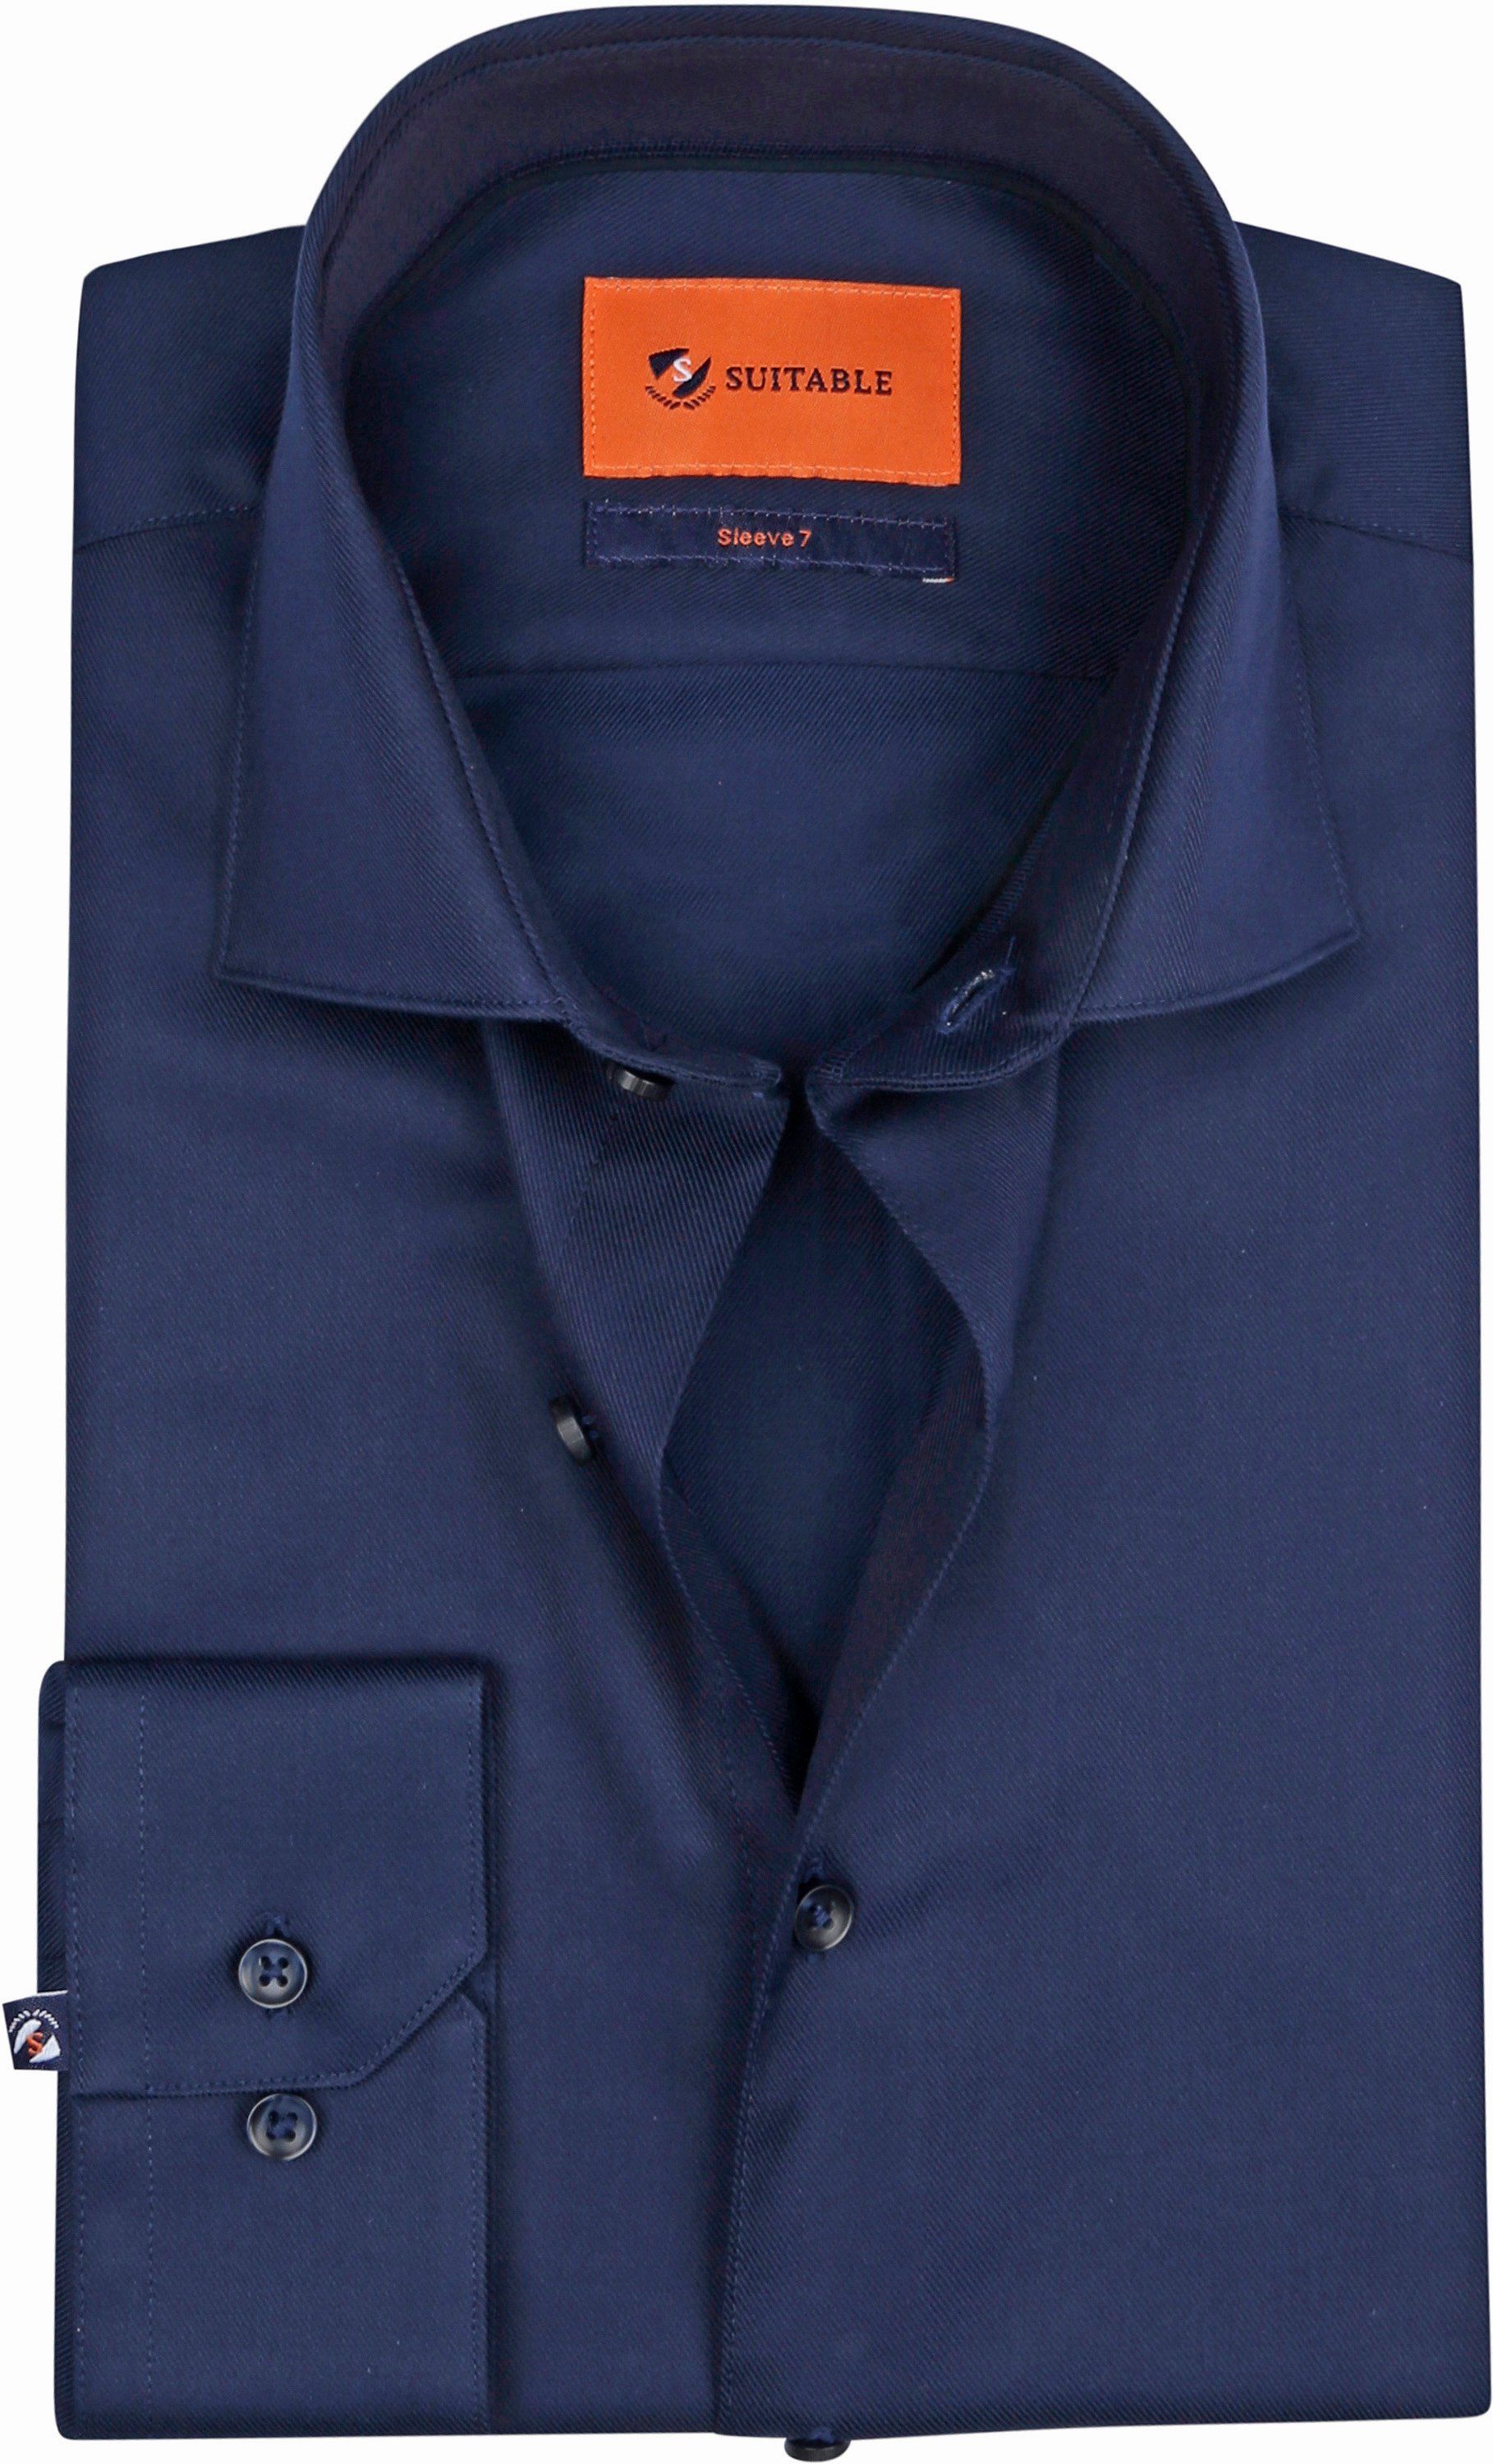 Suitable Shirt Sleeve 7 Twill Navy Blue Dark Blue size 15 1/2